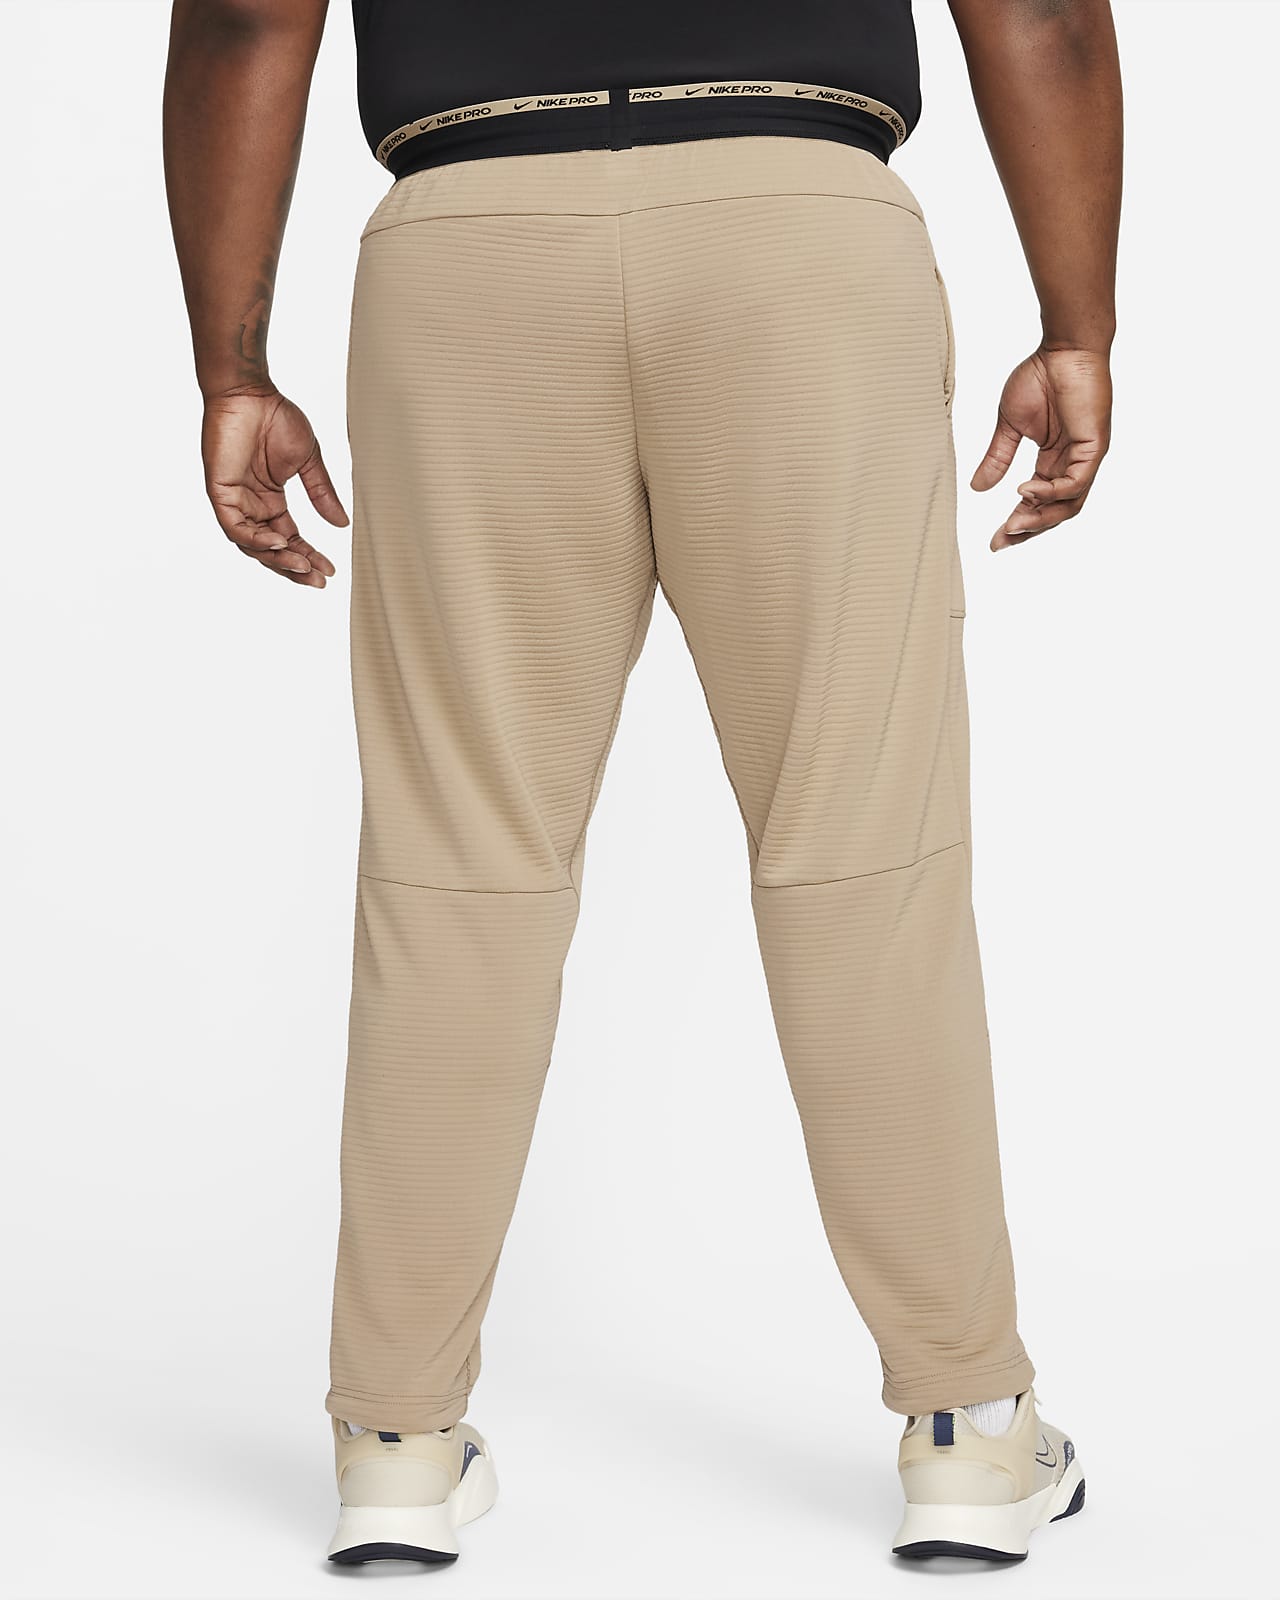 Dri-FIT Fitness Pants. Nike.com